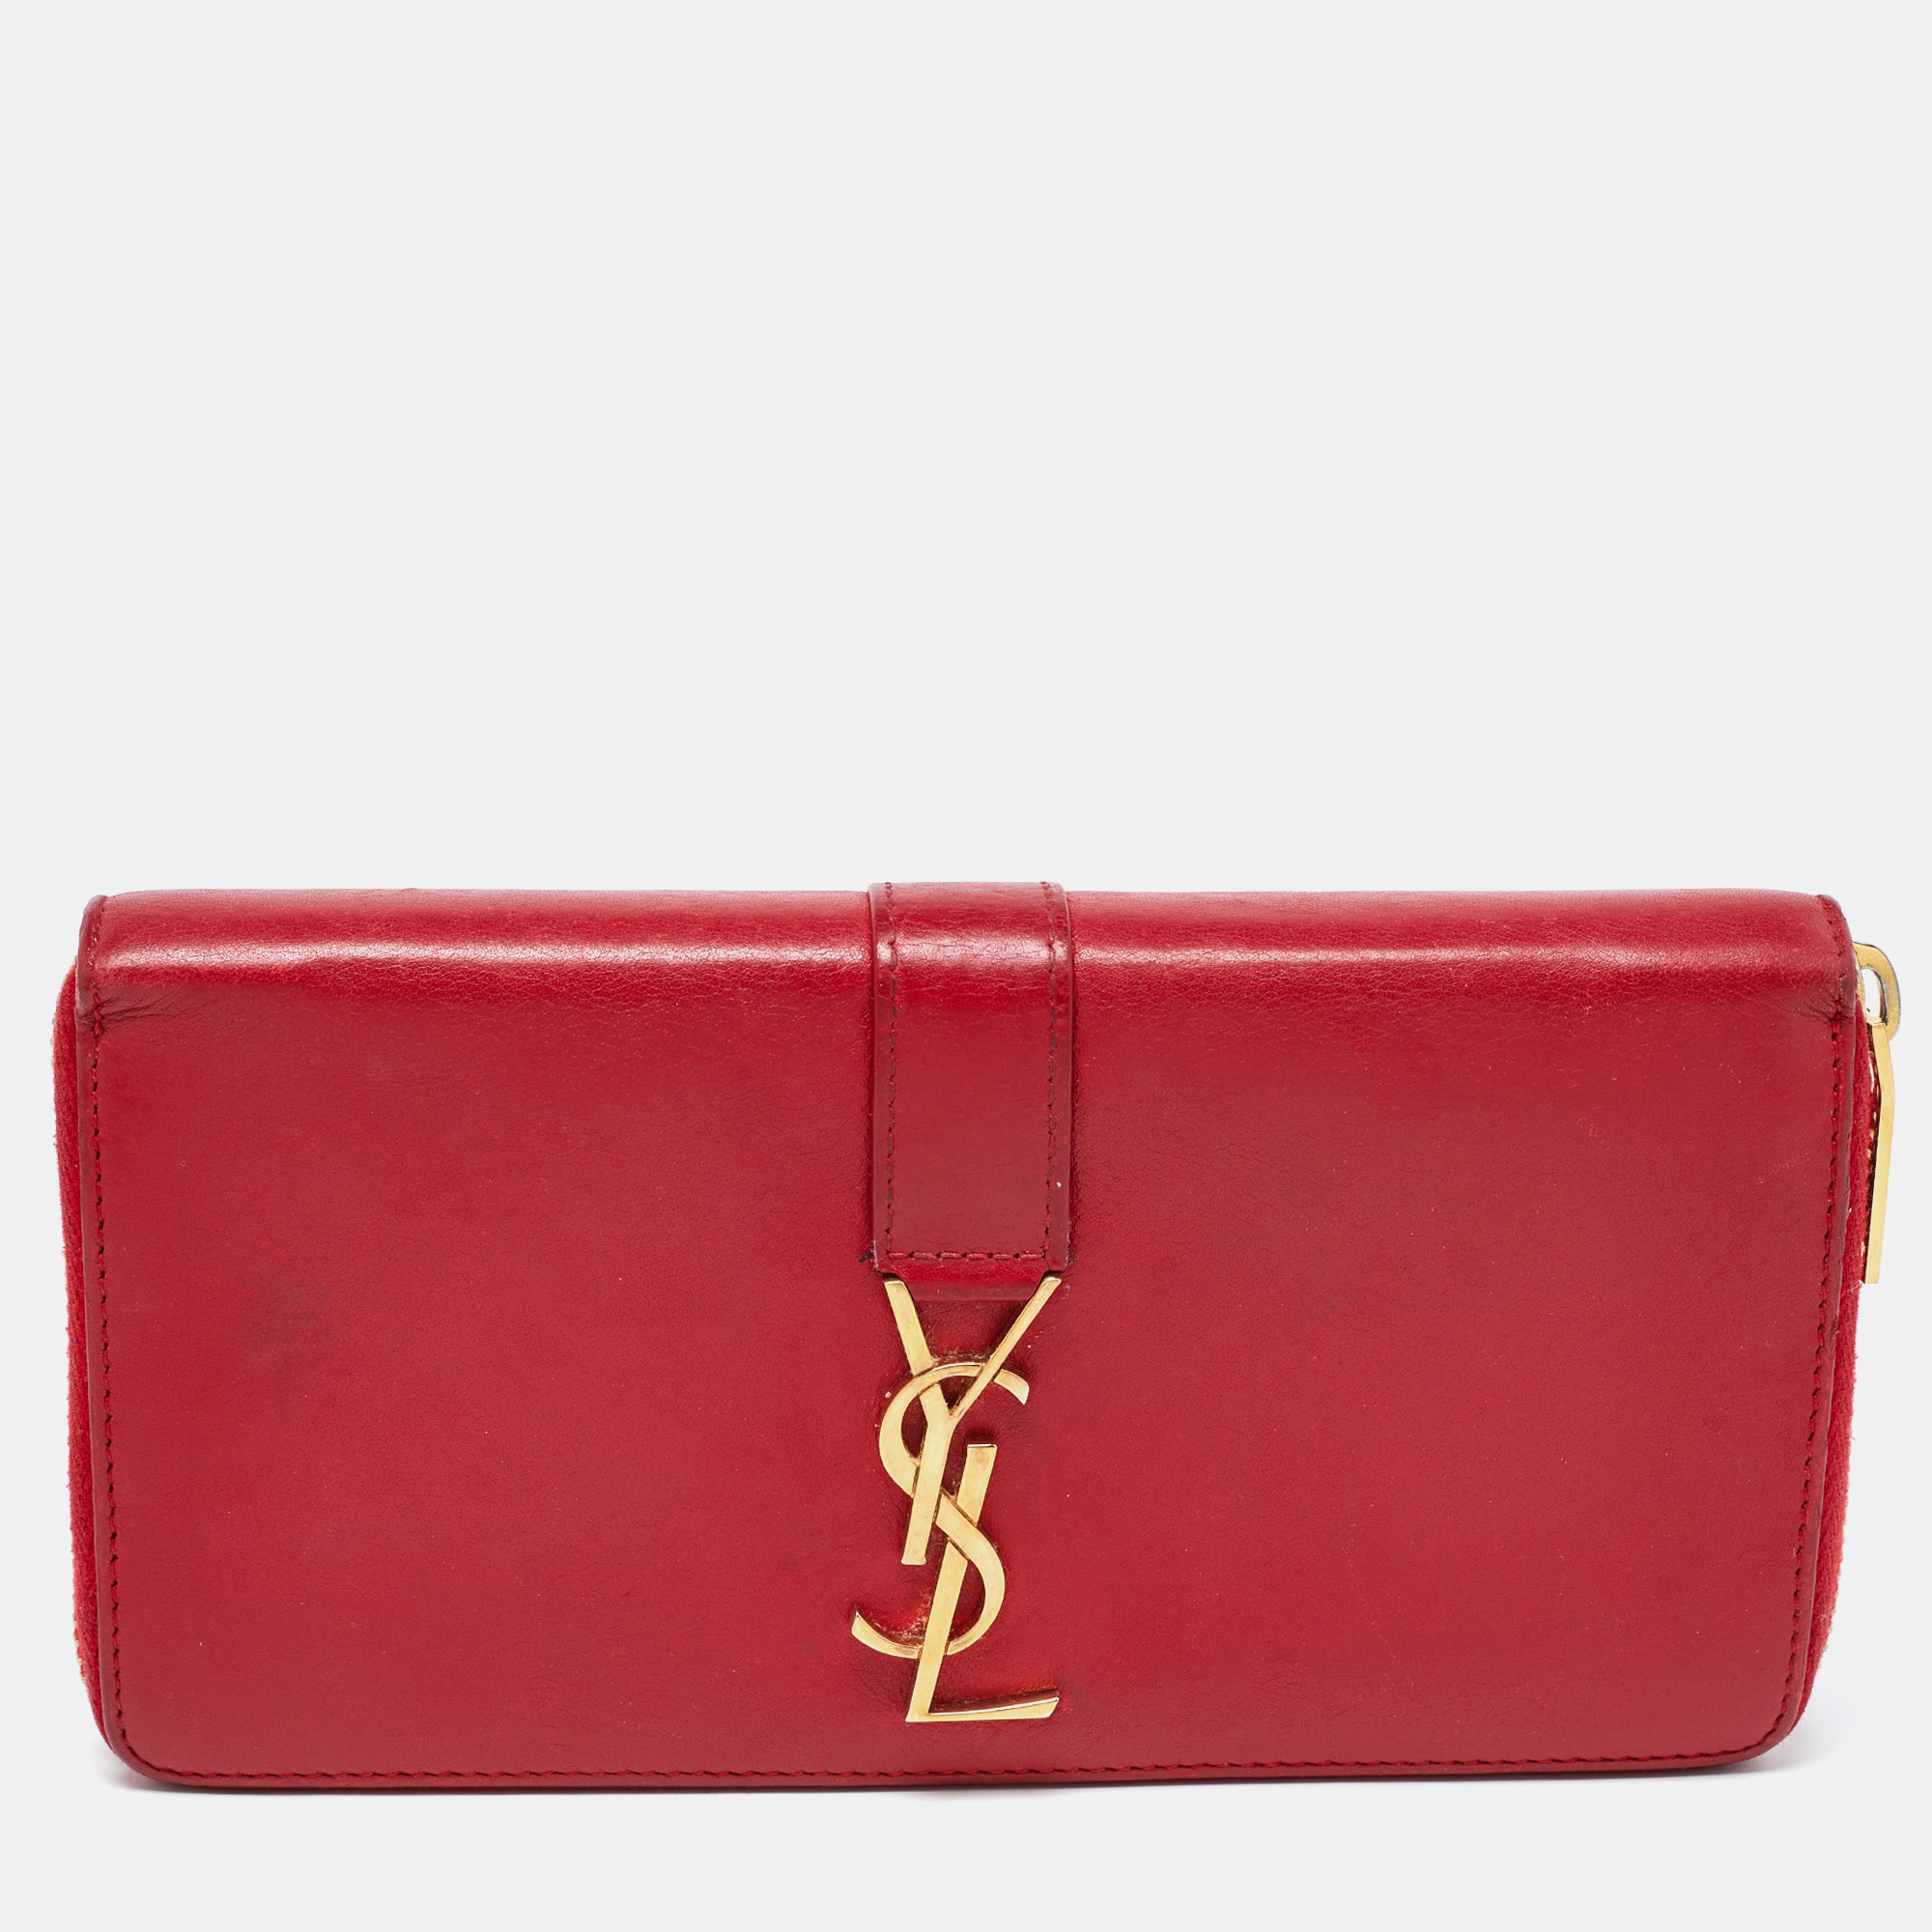 Yves saint laurent saint laurent red leather monogram zip around wallet